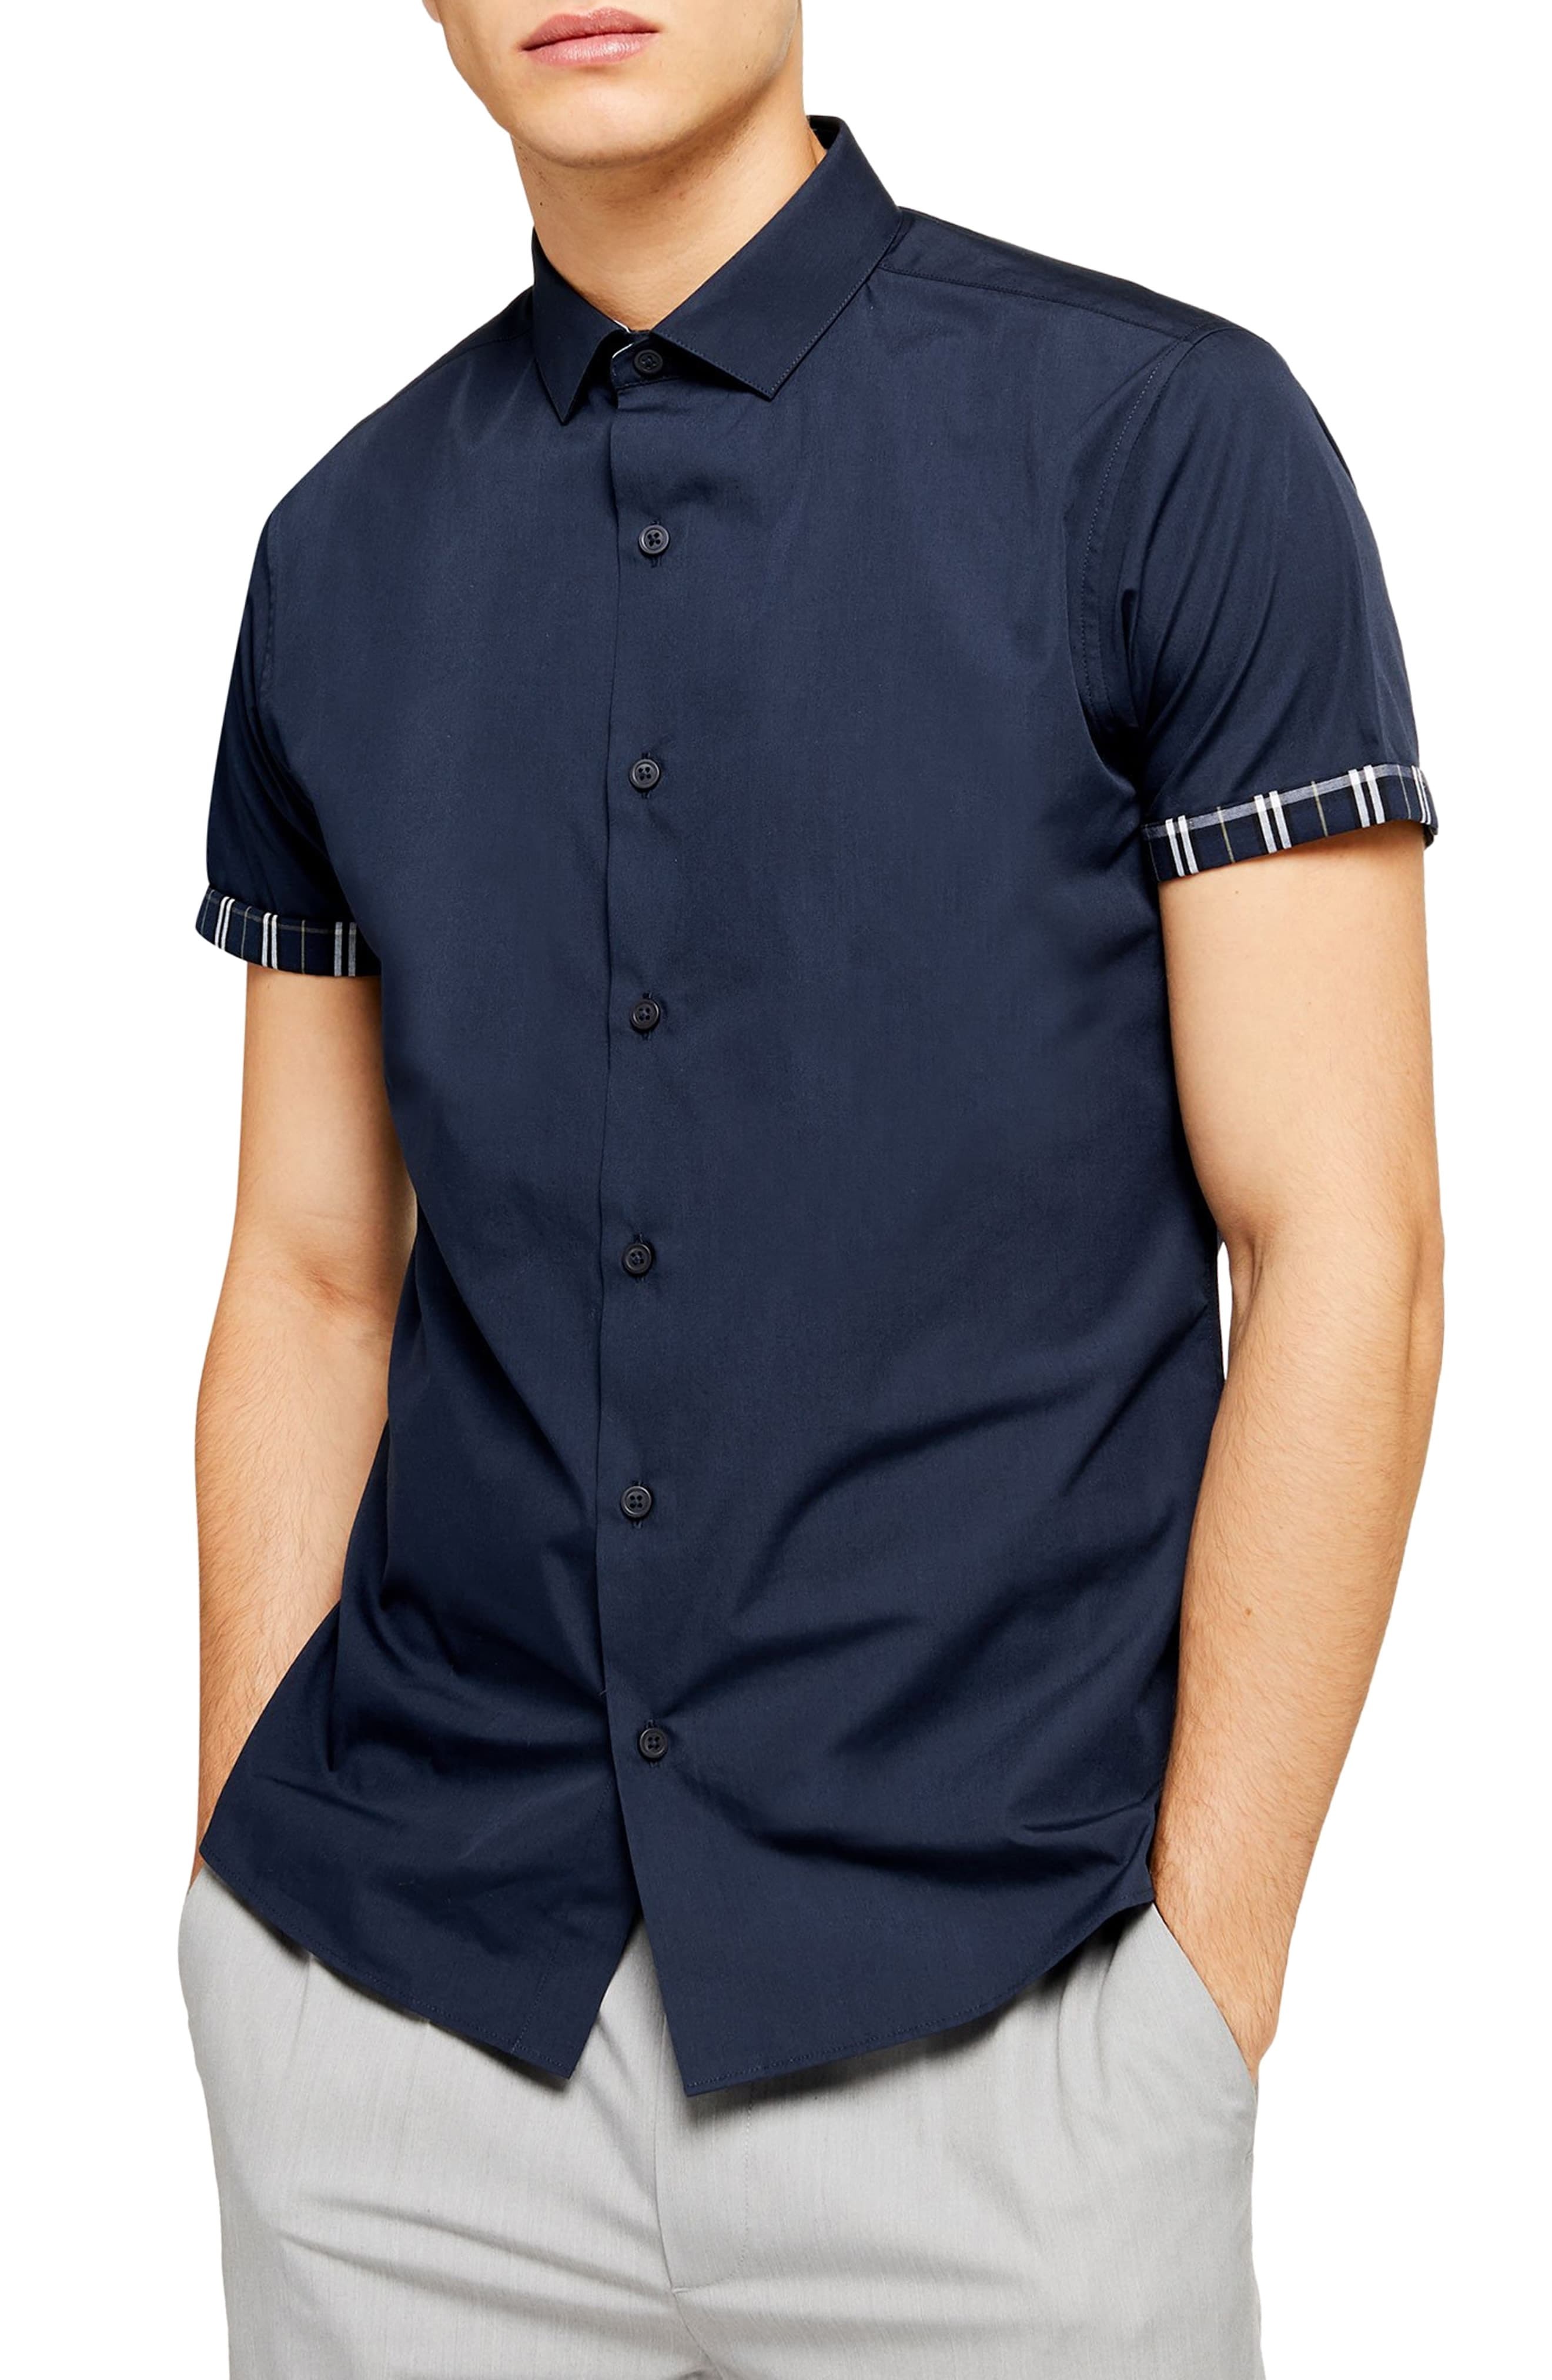 Topman Slim Fit Contrast Cuff Short Sleeve Button Up Shirt, $29